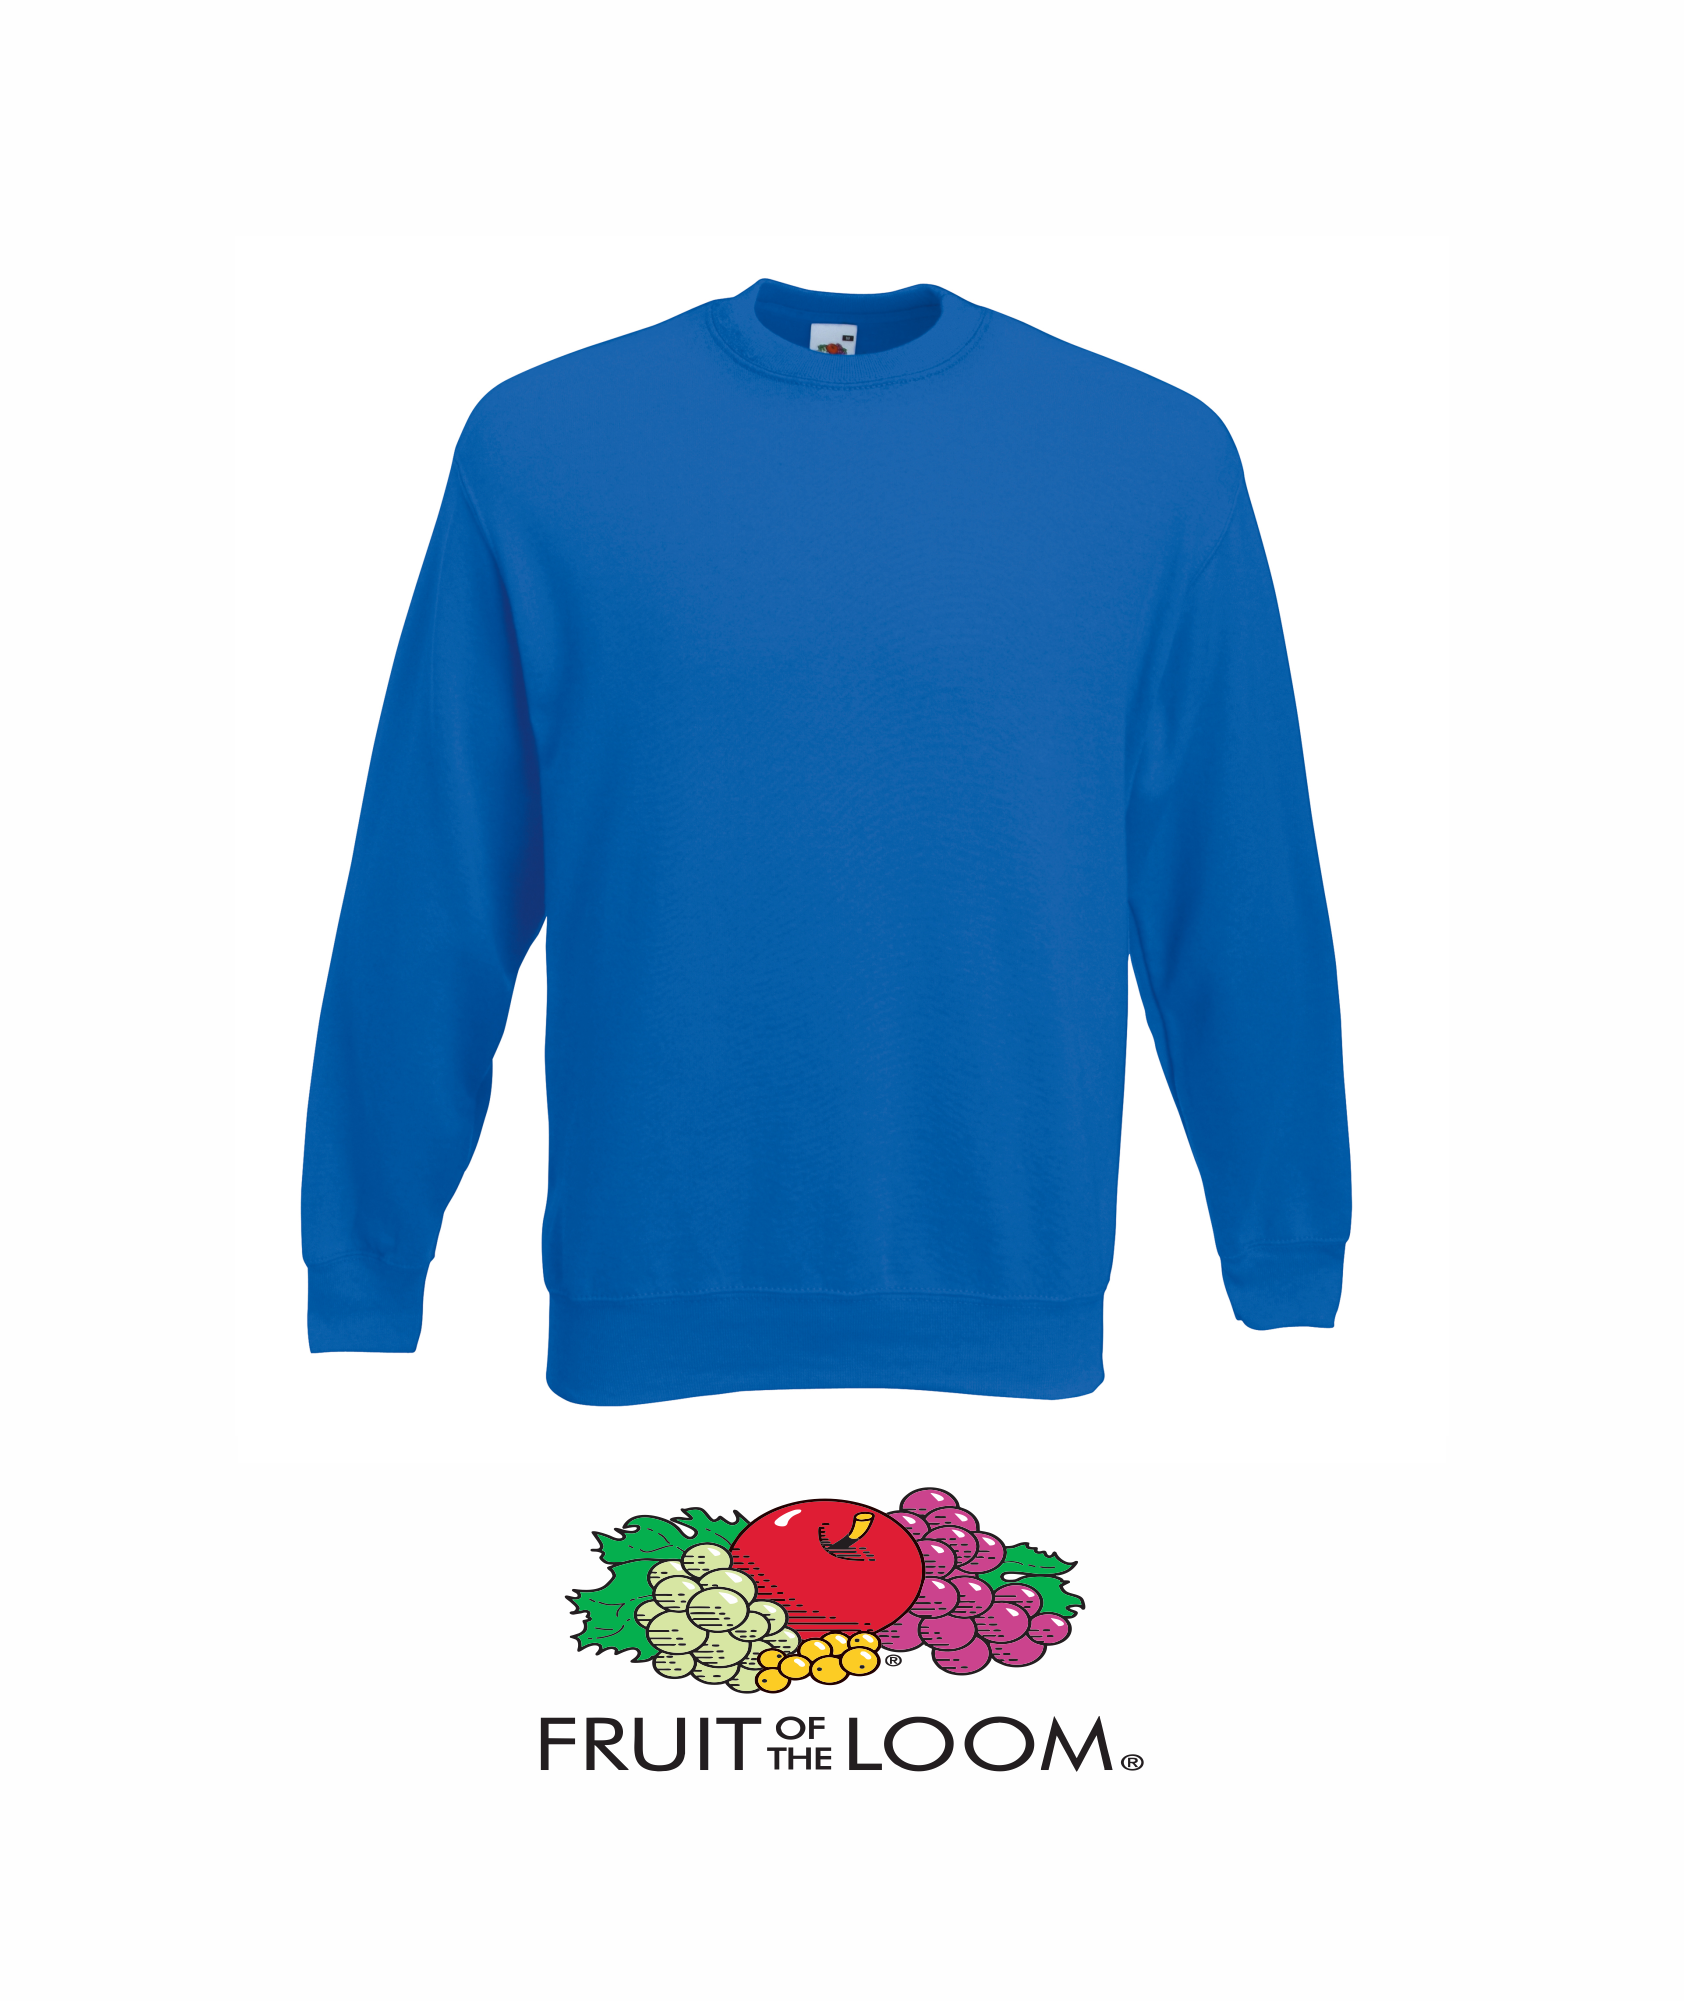 Fruit of the Loom Lightweight set-in sweatshirt — Stitch to Stitch